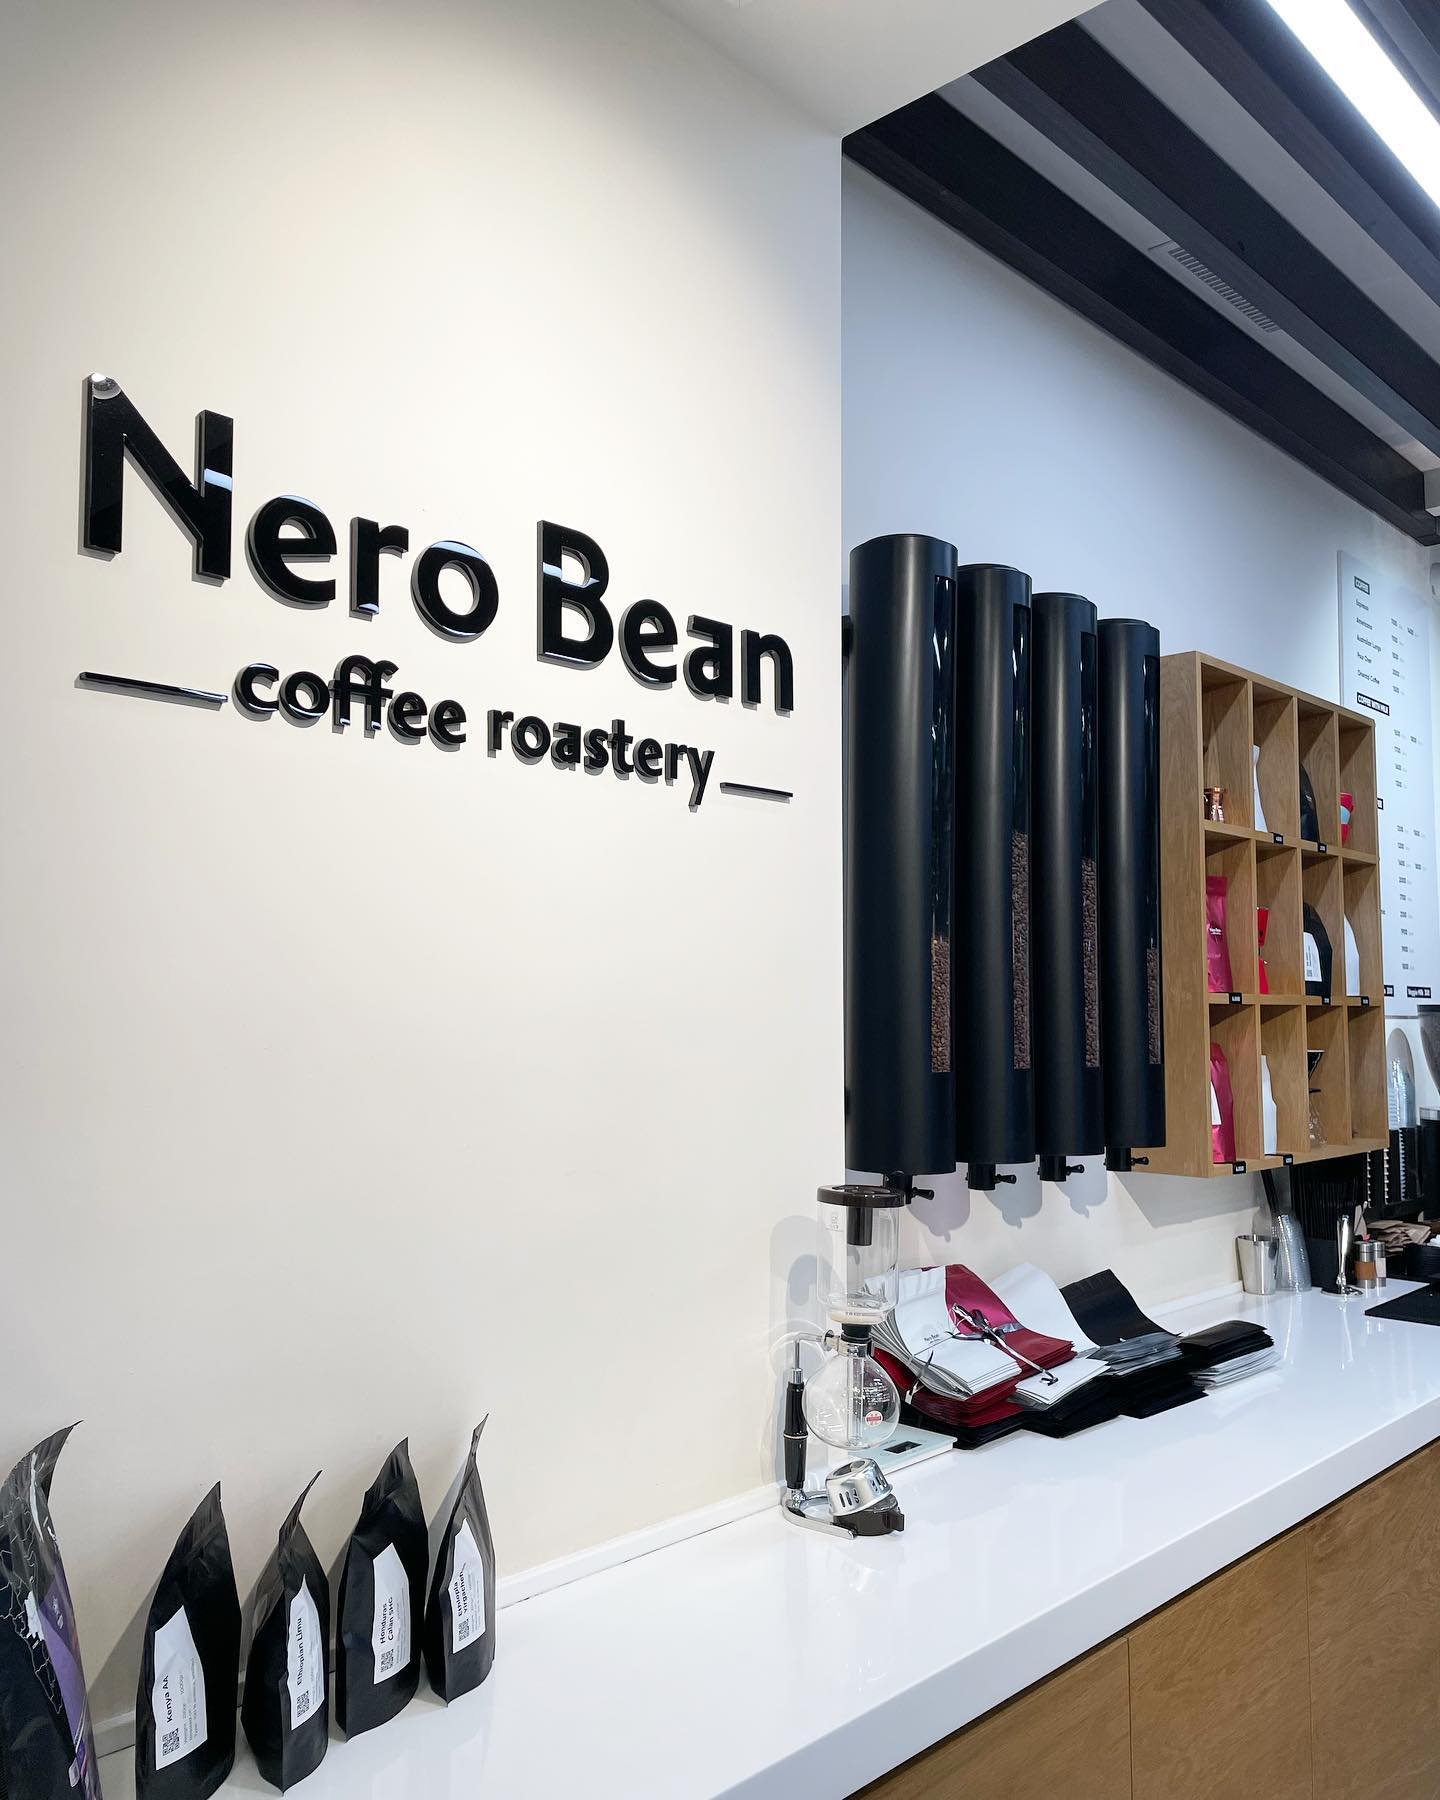 nero bean coffee shop at Center, Yerevan, Armenia